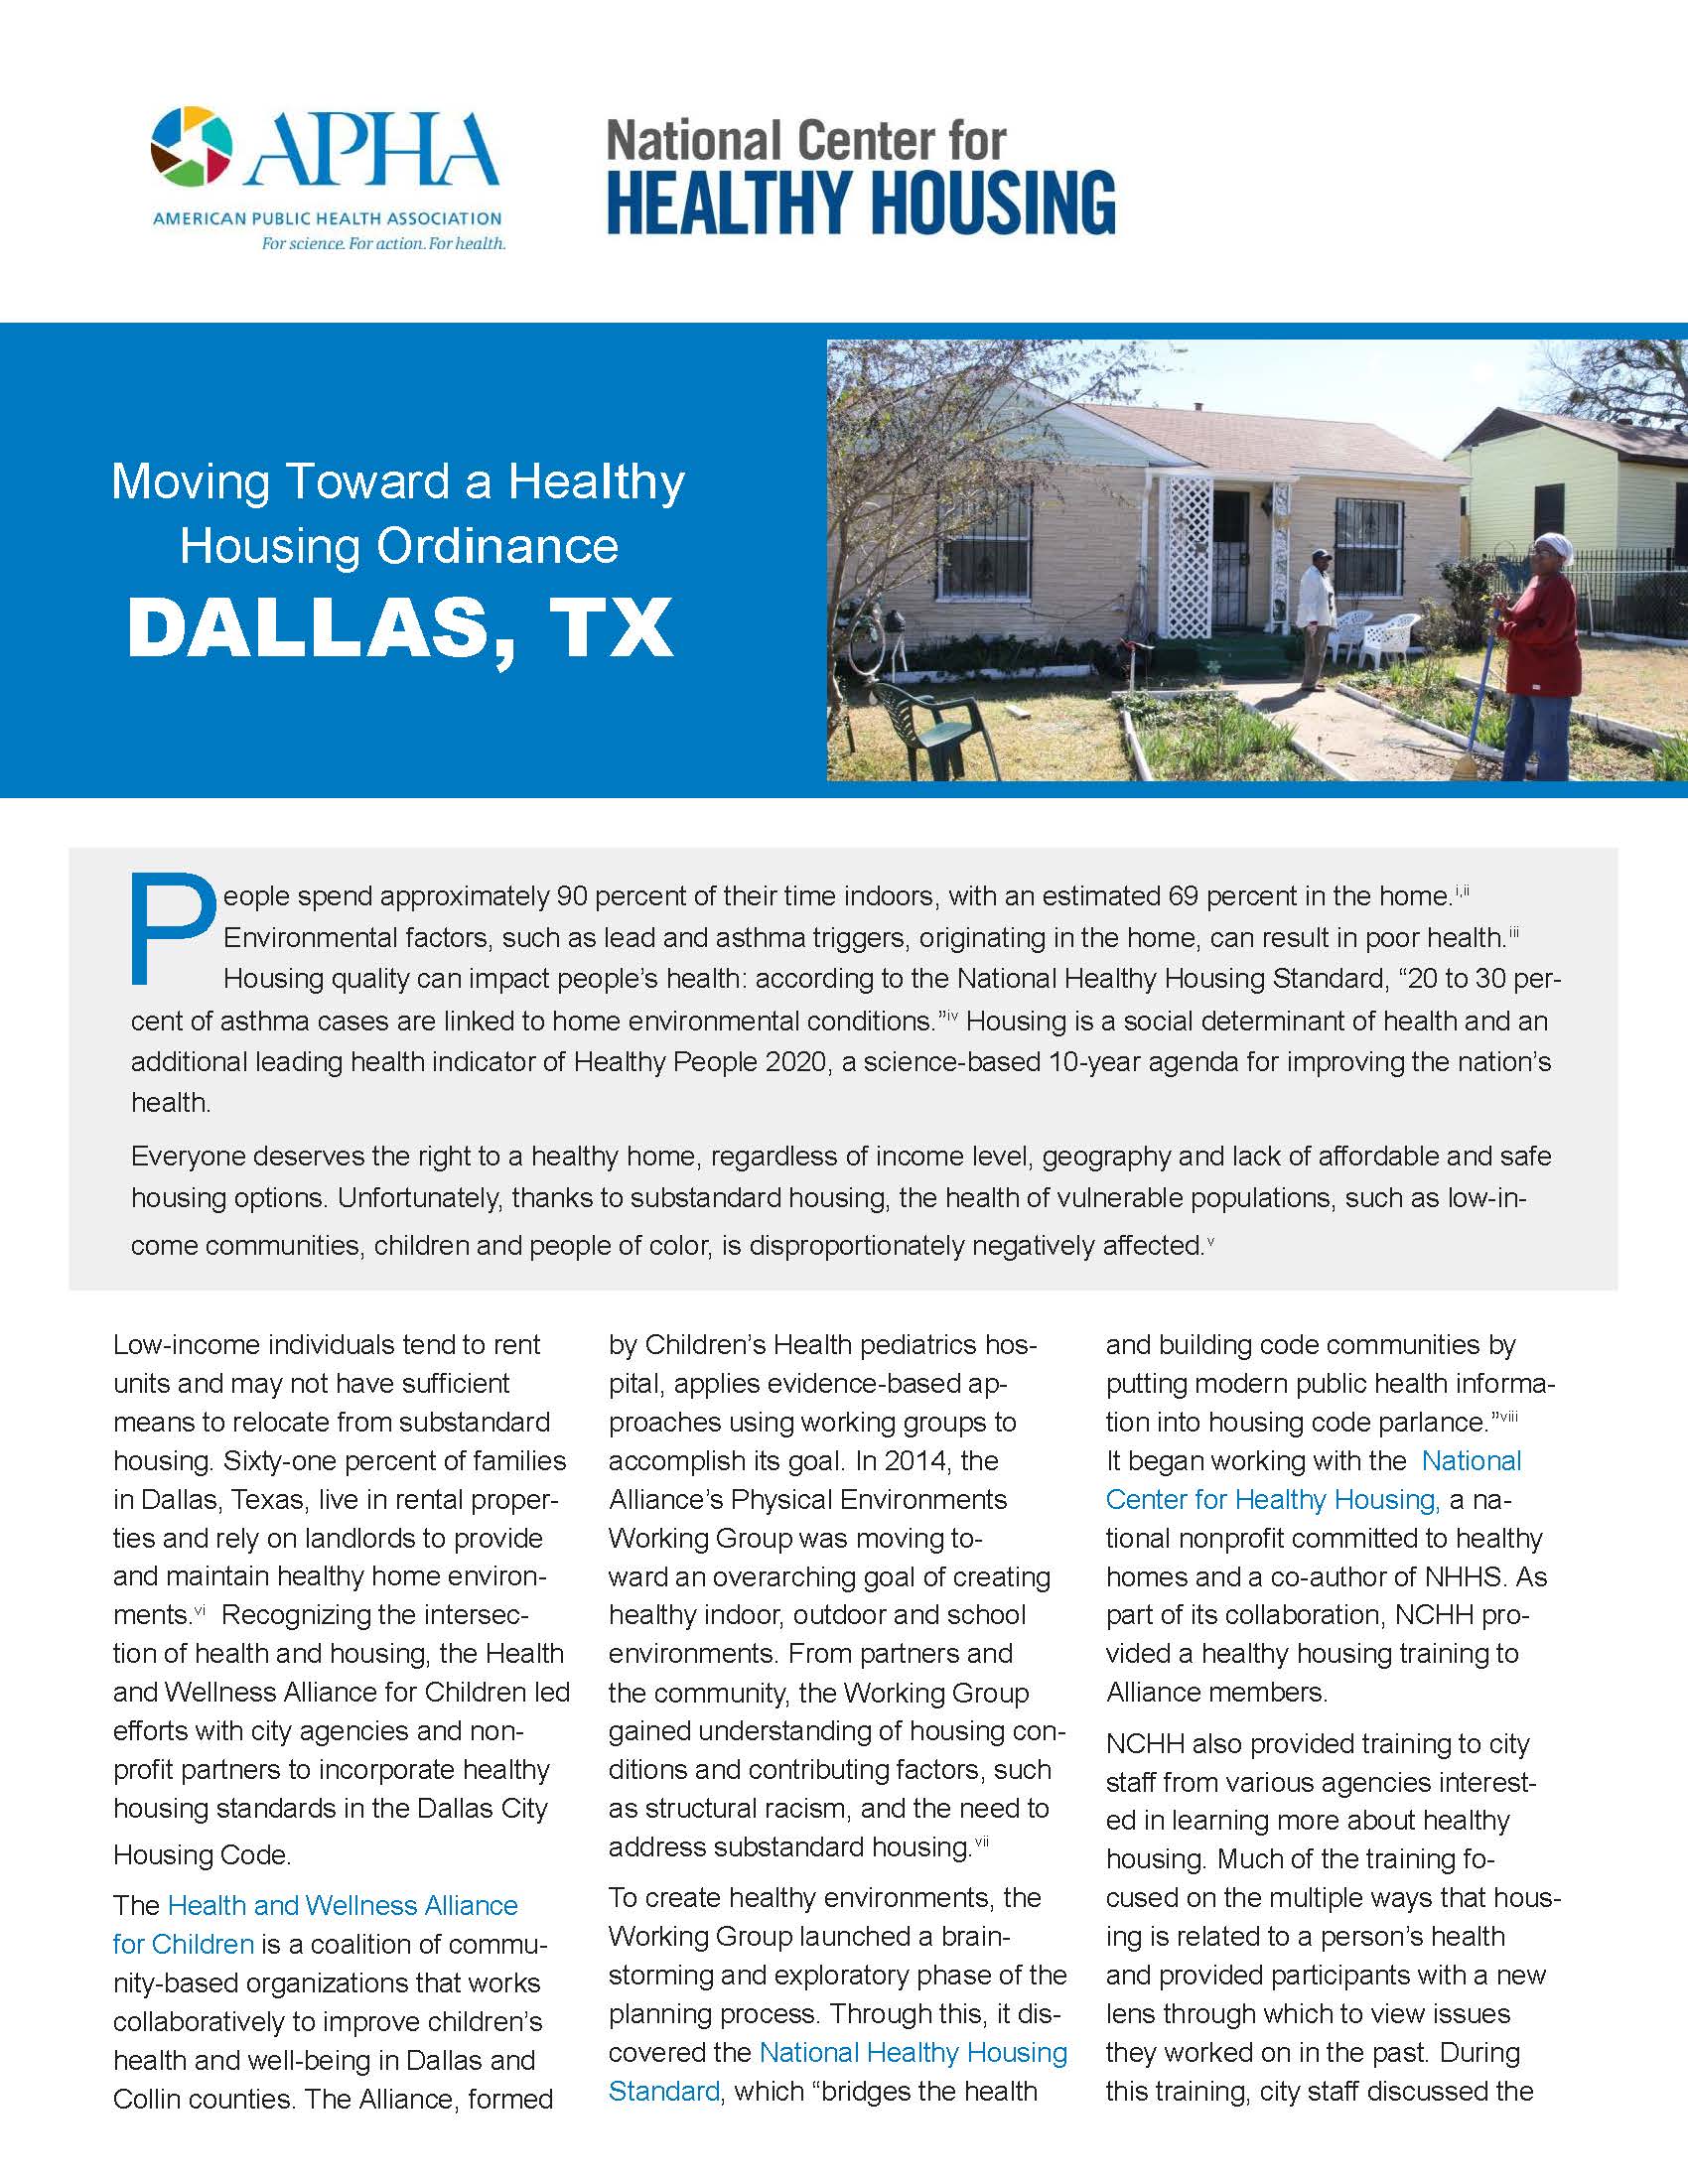 Moving Toward a Healthy Housing Ordinance: Dallas, TX